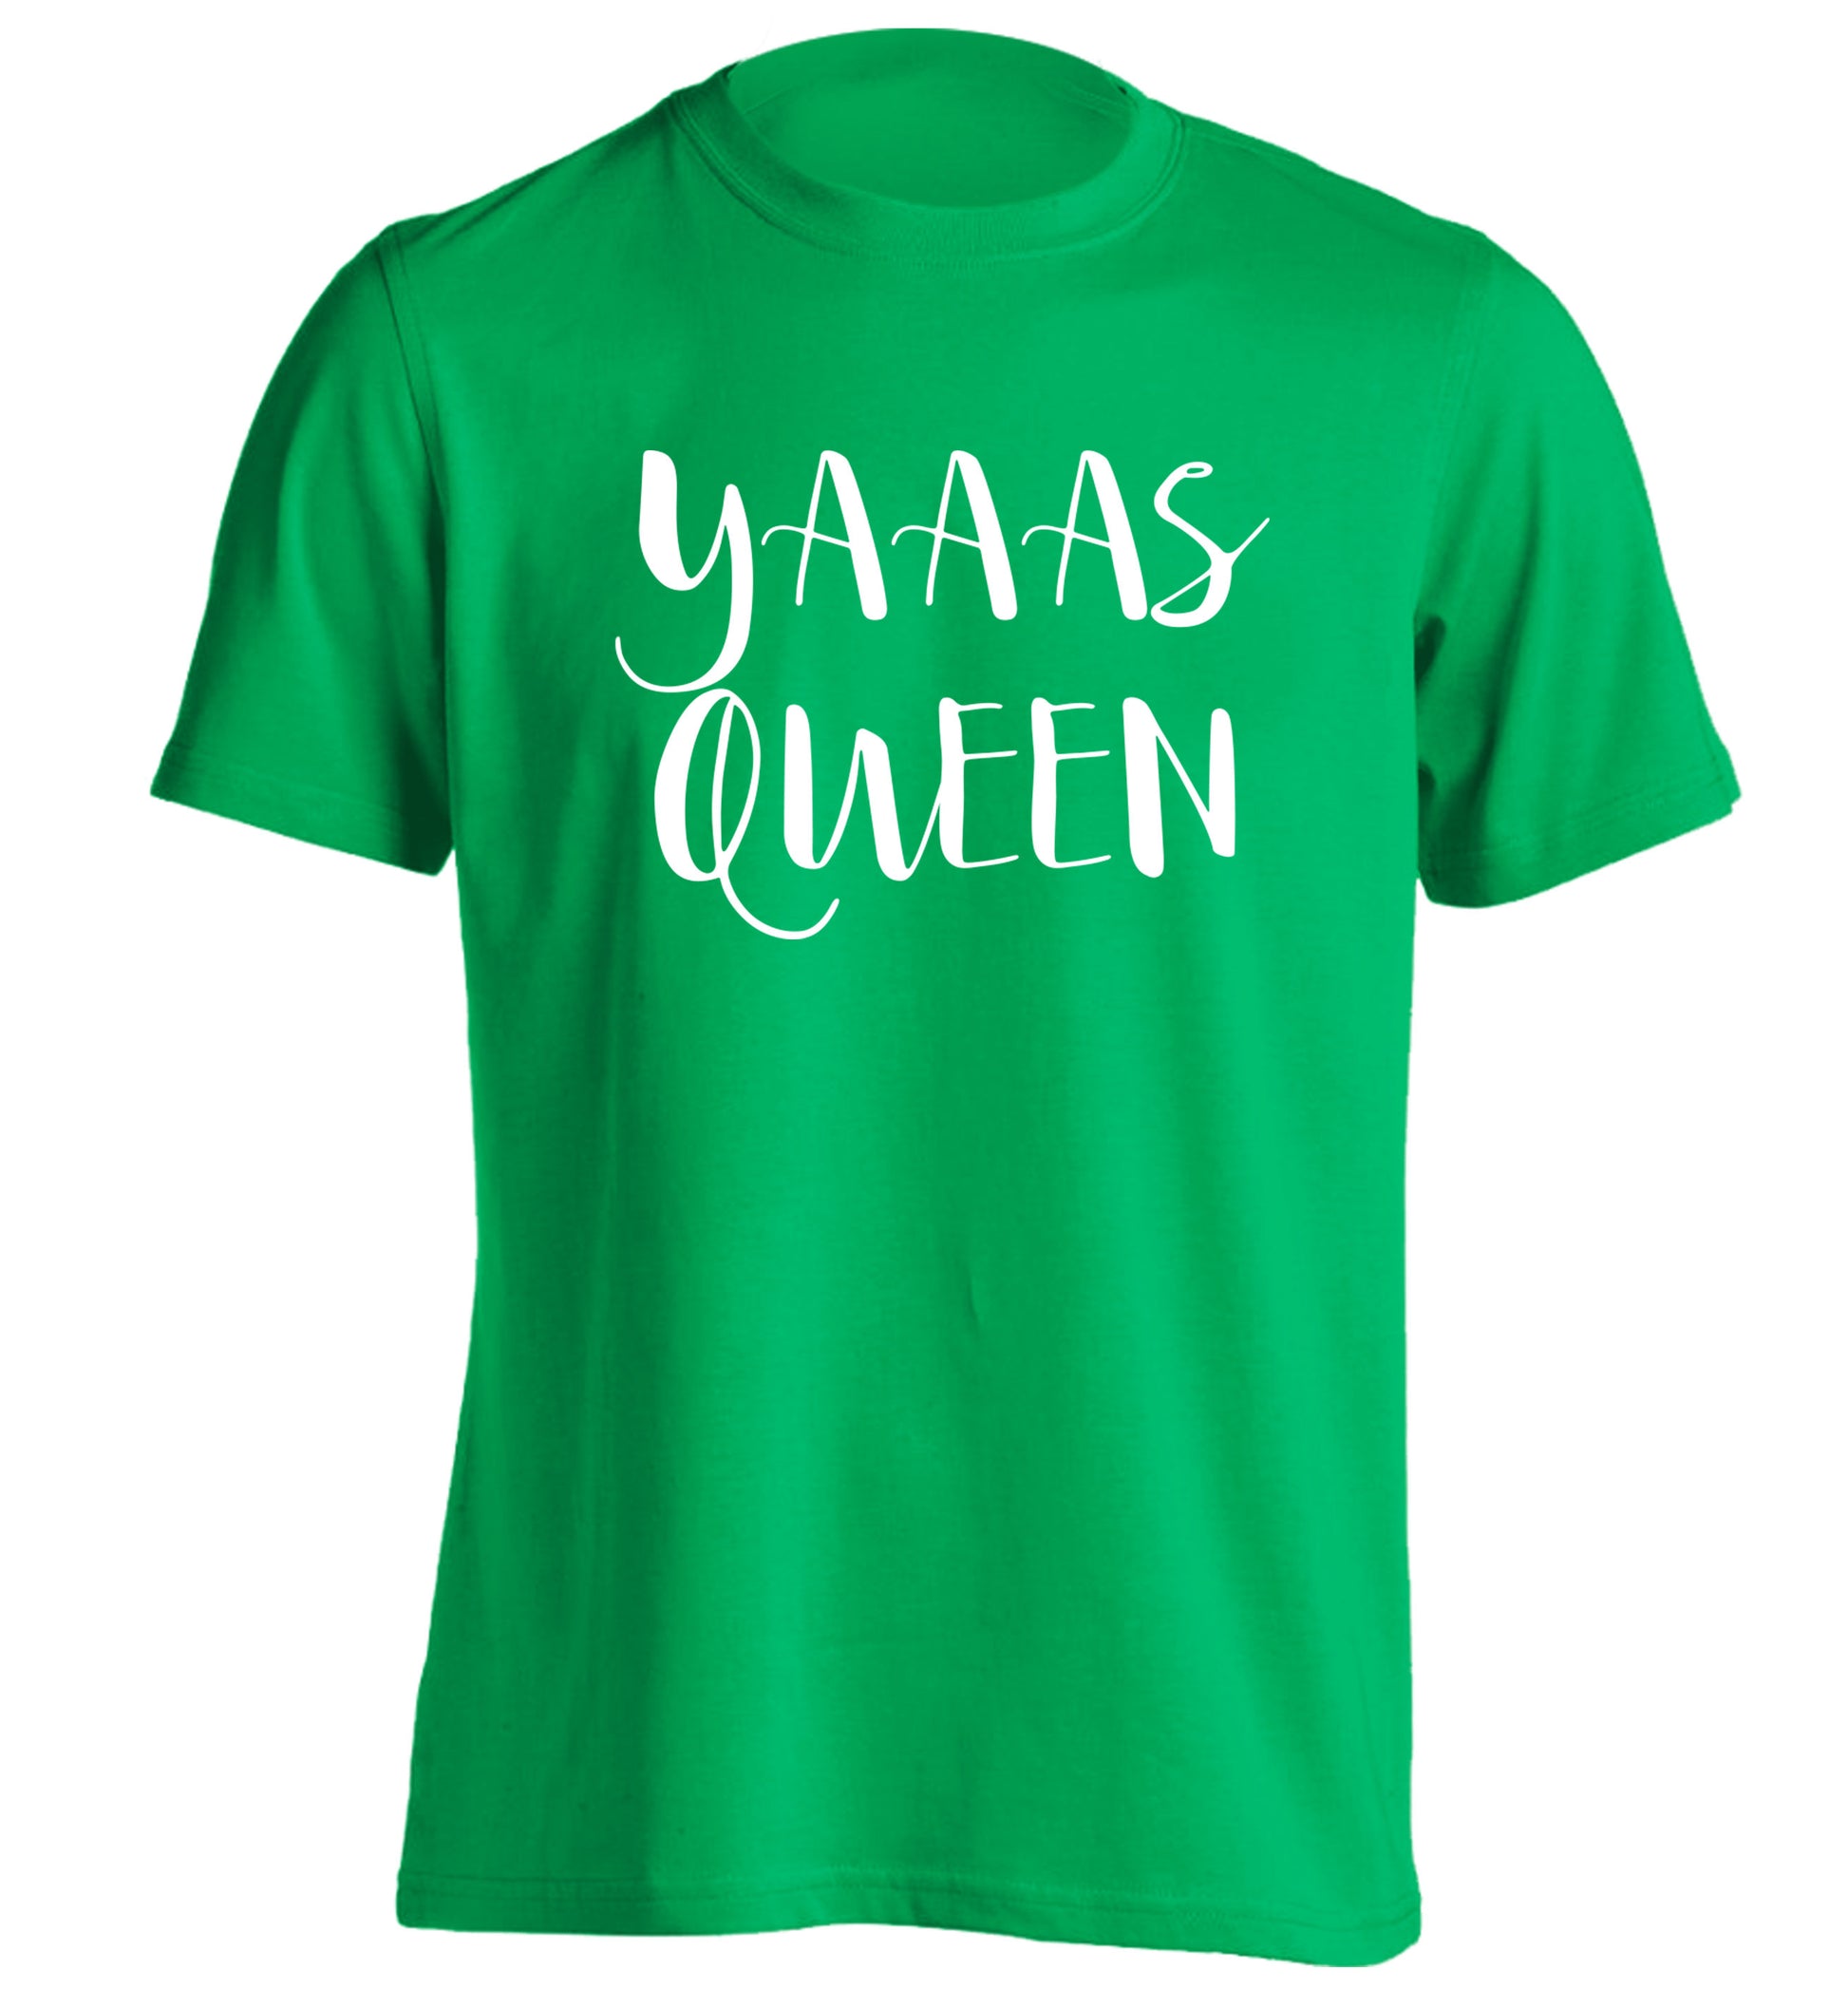 Yas Queen adults unisex green Tshirt 2XL